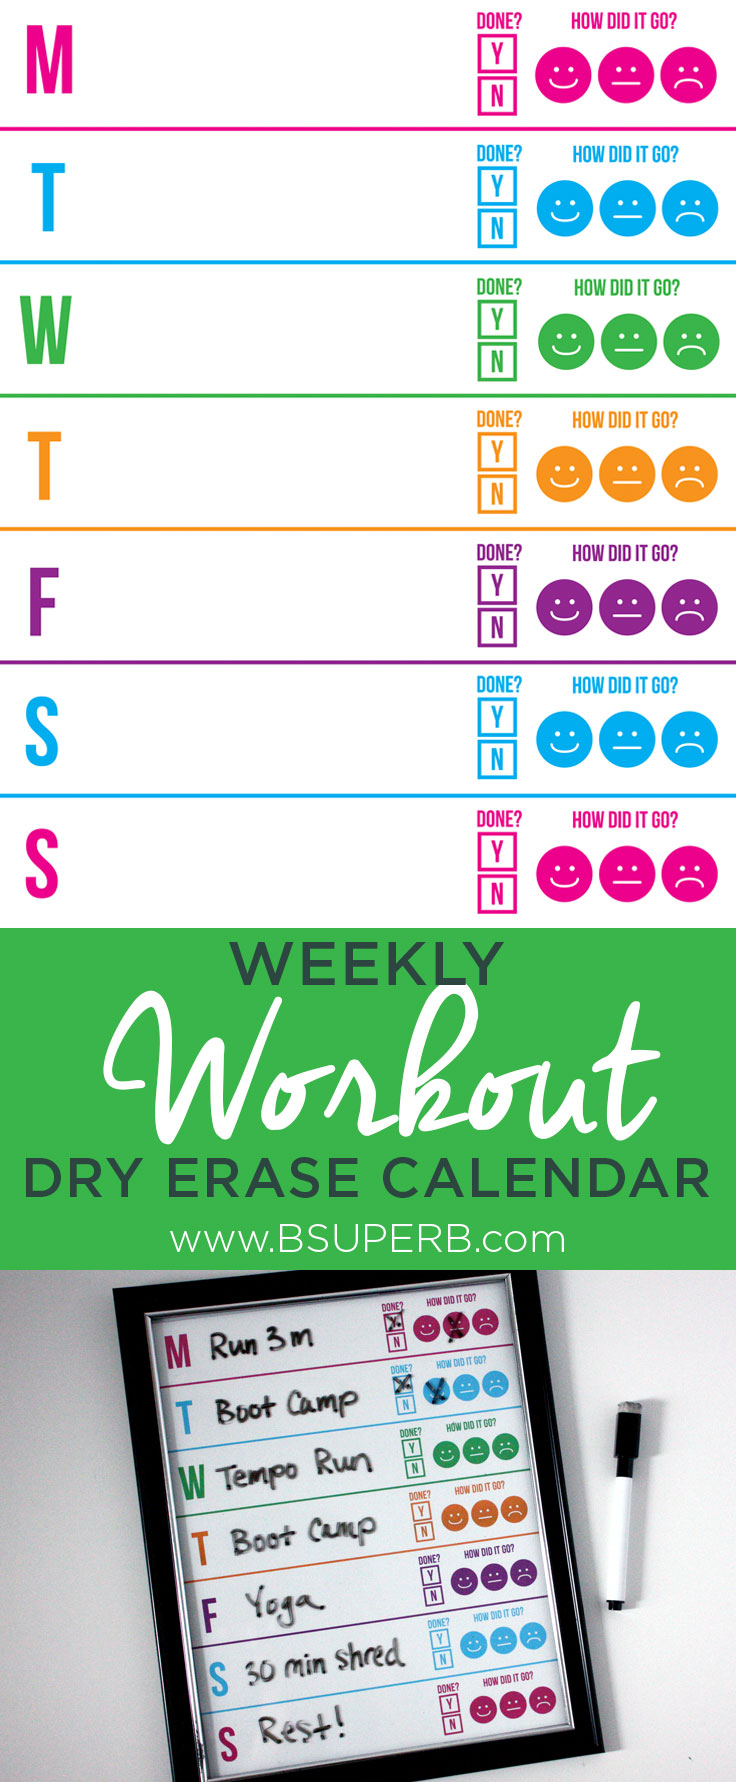 Weekly Workout Dry Erase Calendar